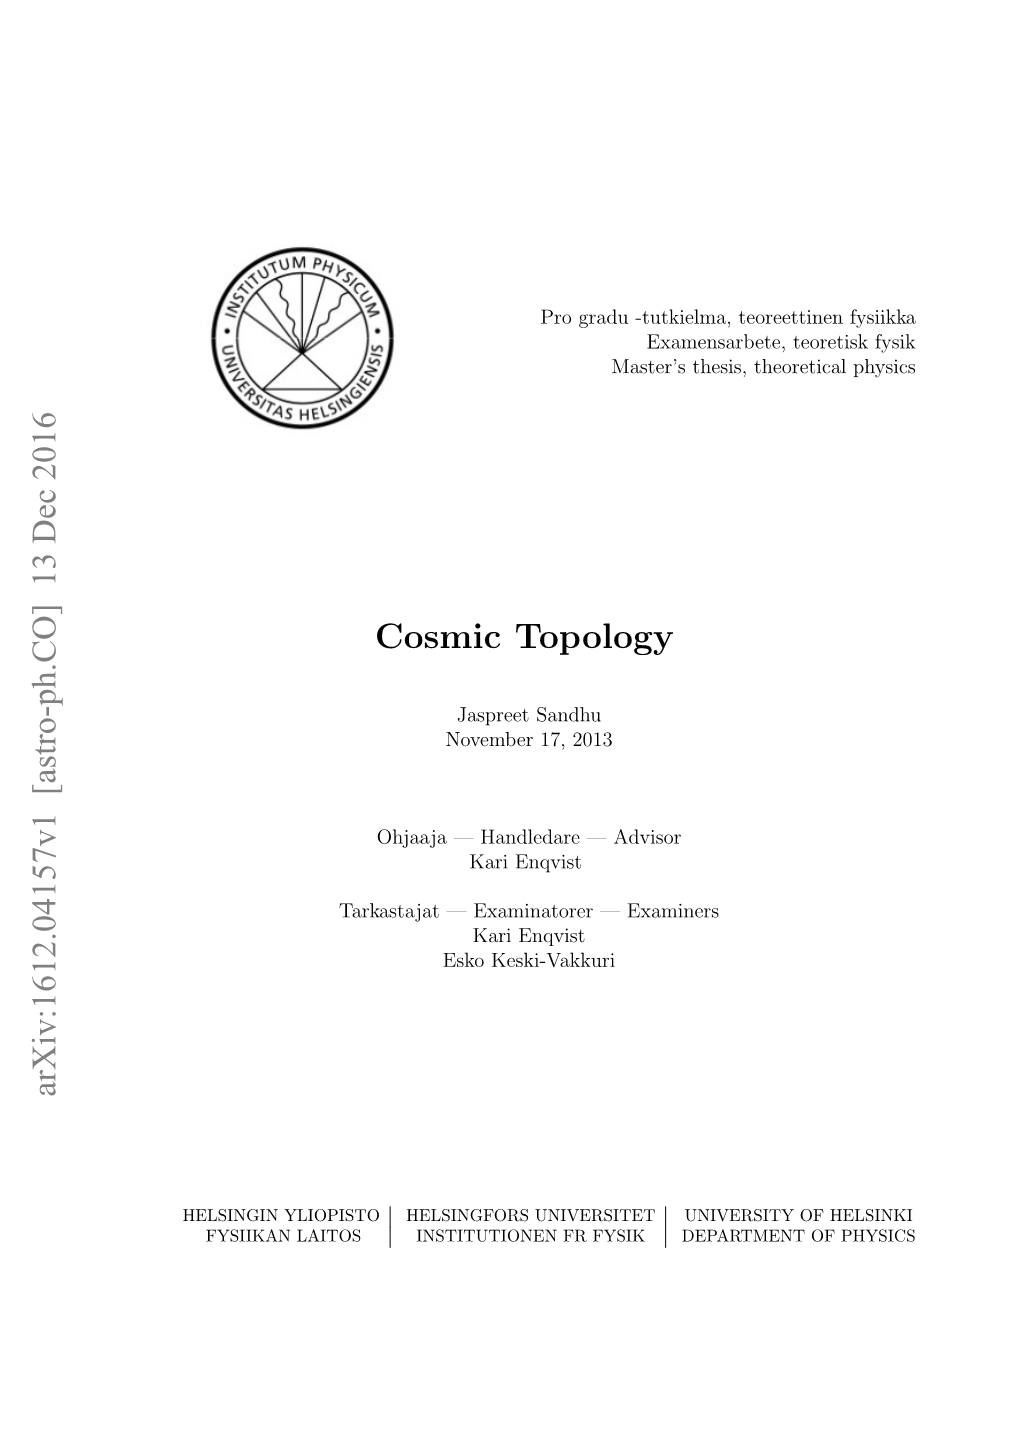 Cosmic Topology